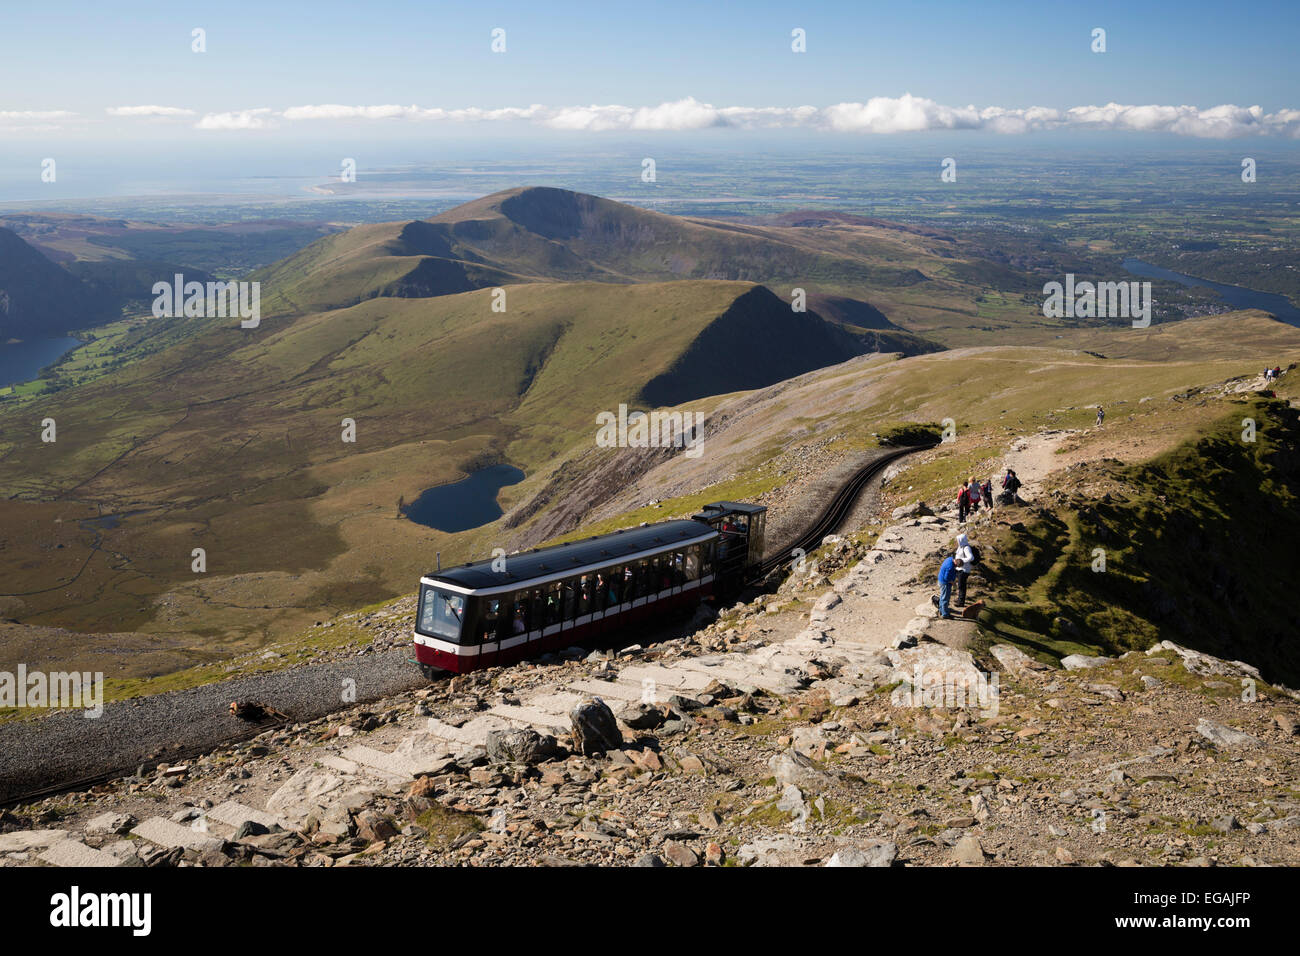 Snowdon Mountain Railway train at summit of Snowdon, near Llanberis, Snowdonia National Park, Gwynedd, Wales; United Kingdom Stock Photo